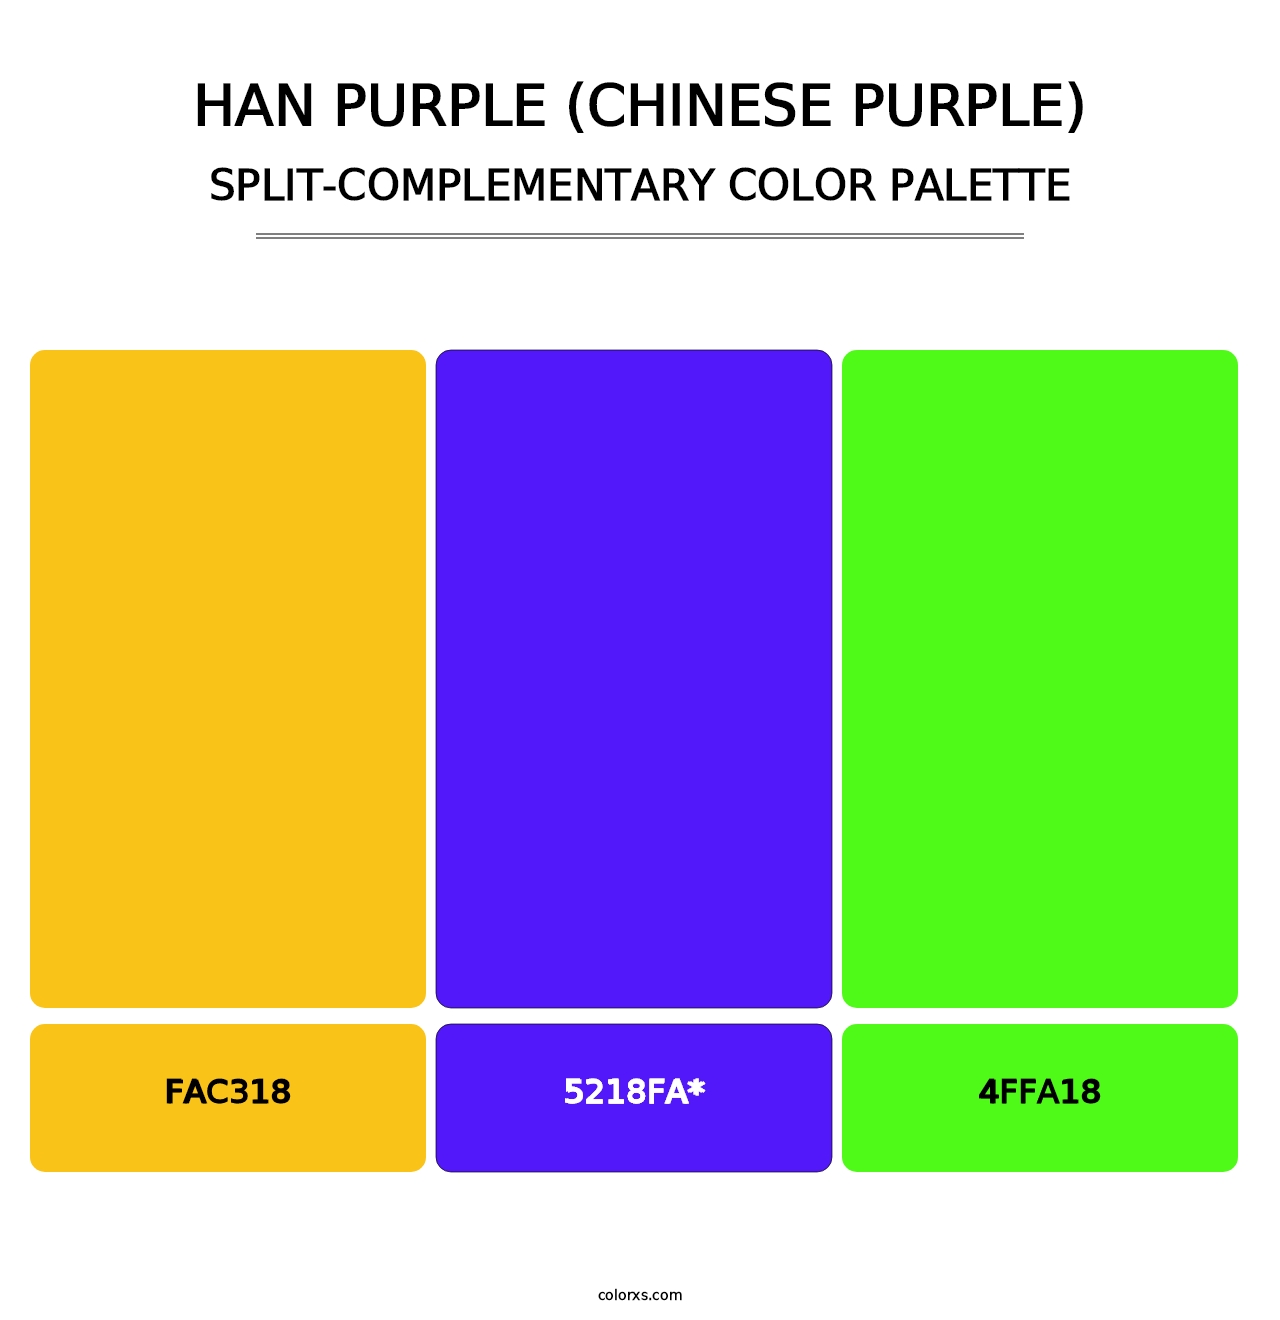 Han Purple (Chinese Purple) - Split-Complementary Color Palette